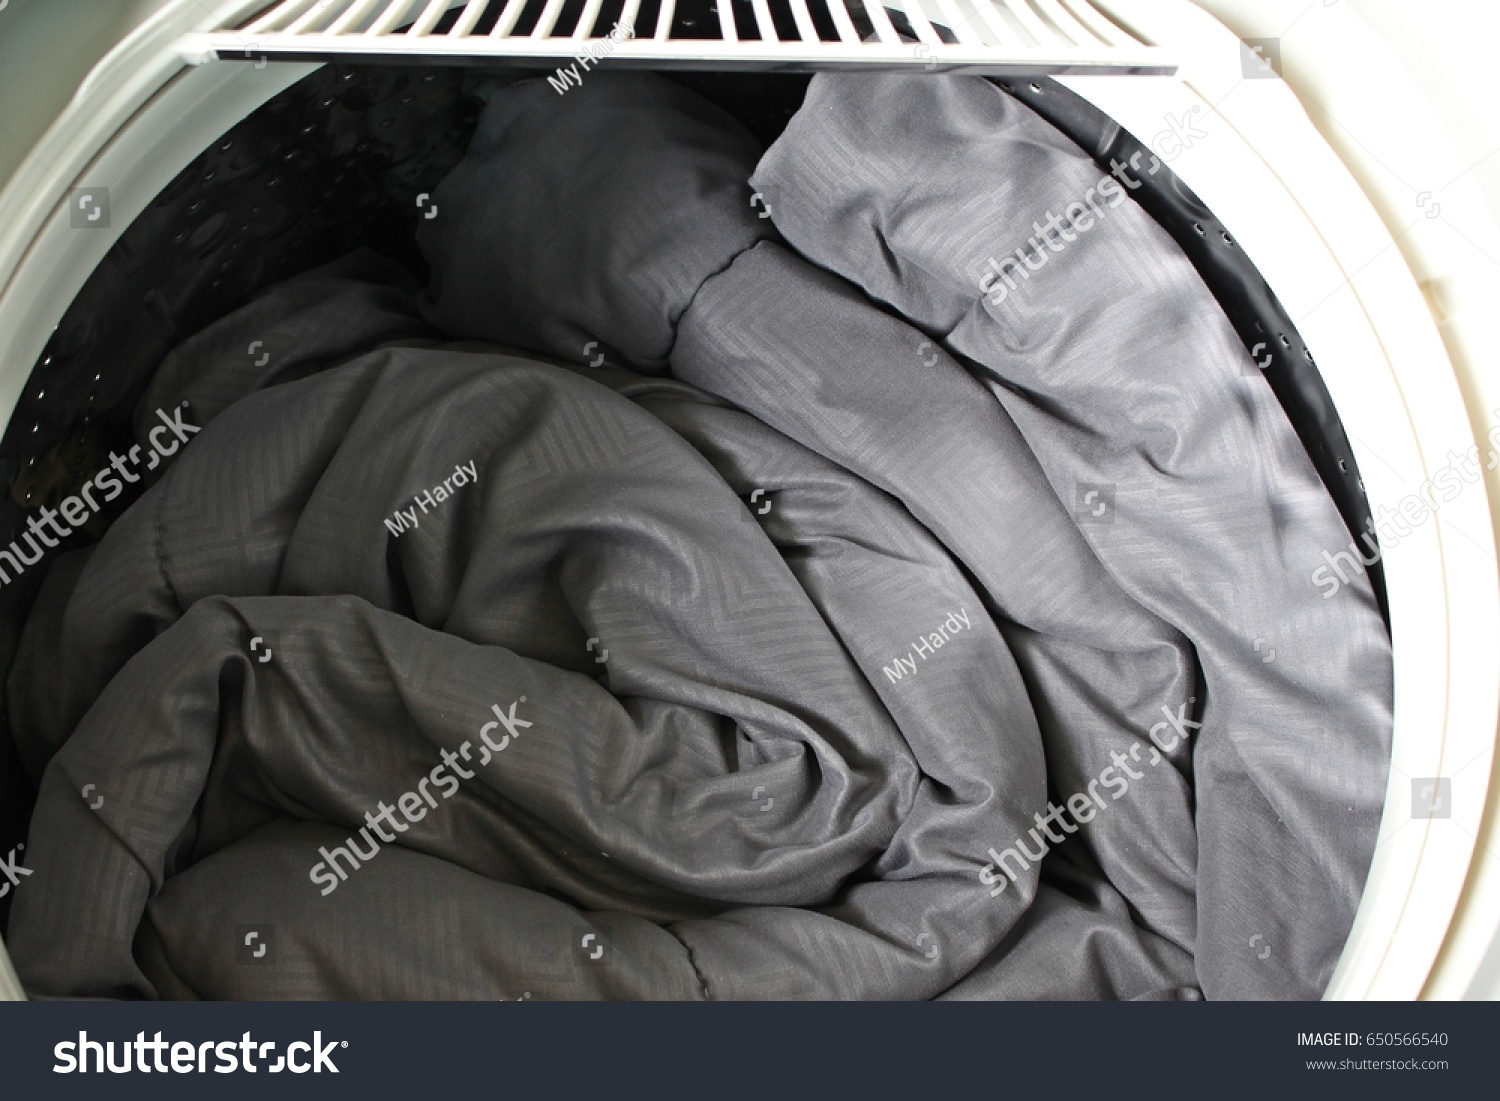 Roll Duvet Put Washing Machine Stock Image Download Now